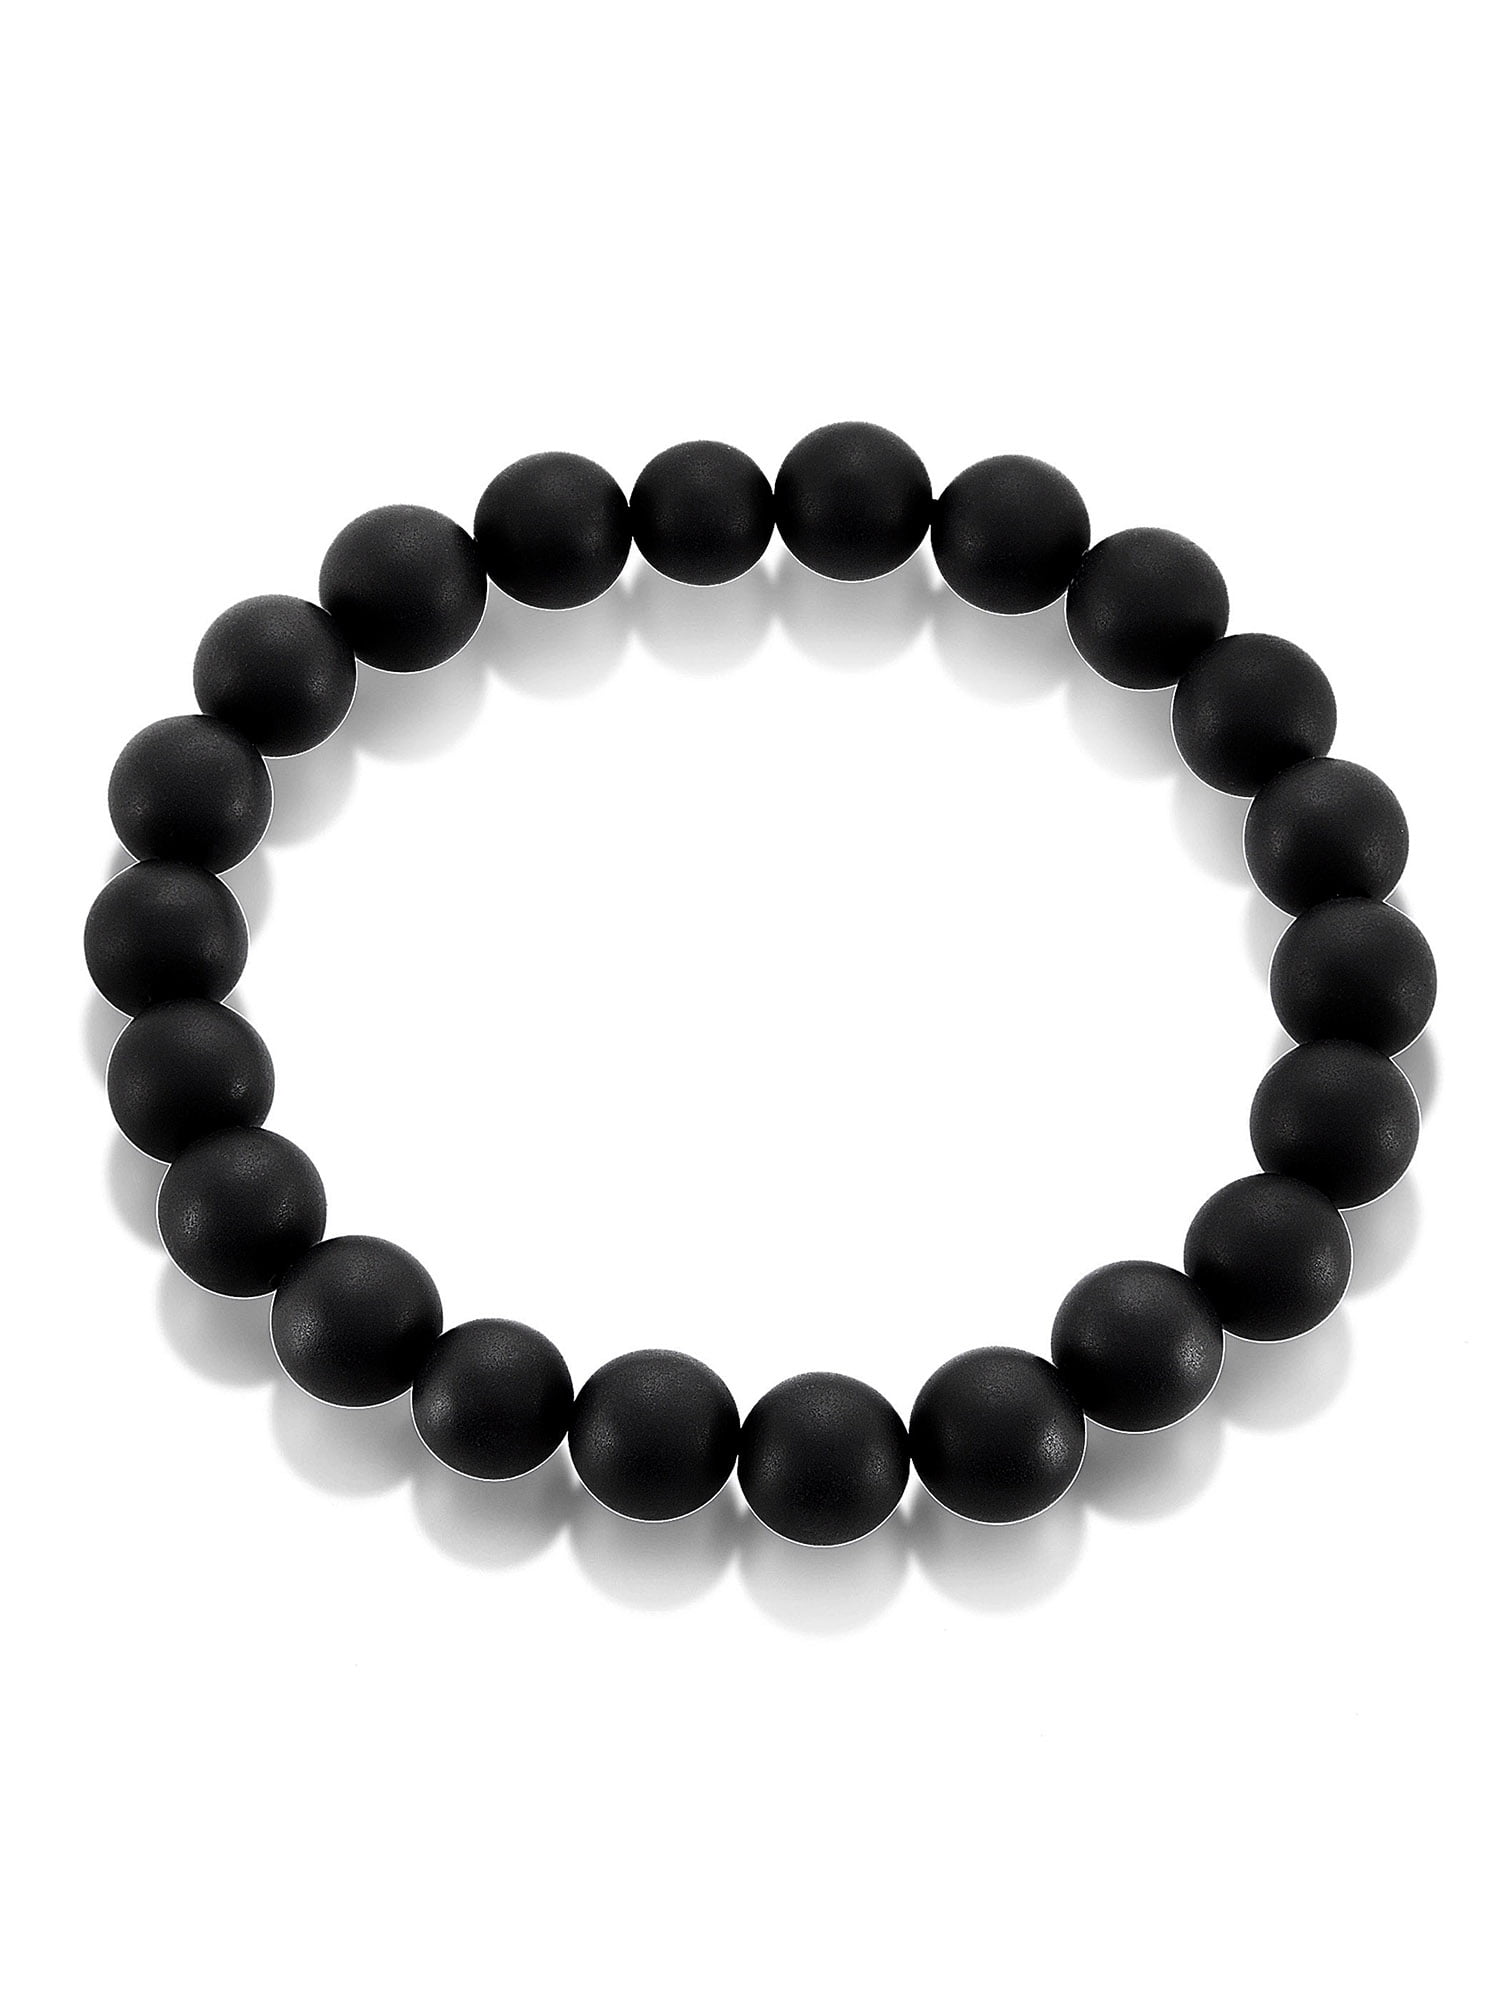 Matte Black Bead Name Bracelet, Black Bead Stretch Bracelet With Name,  Black Letter Beads - Etsy